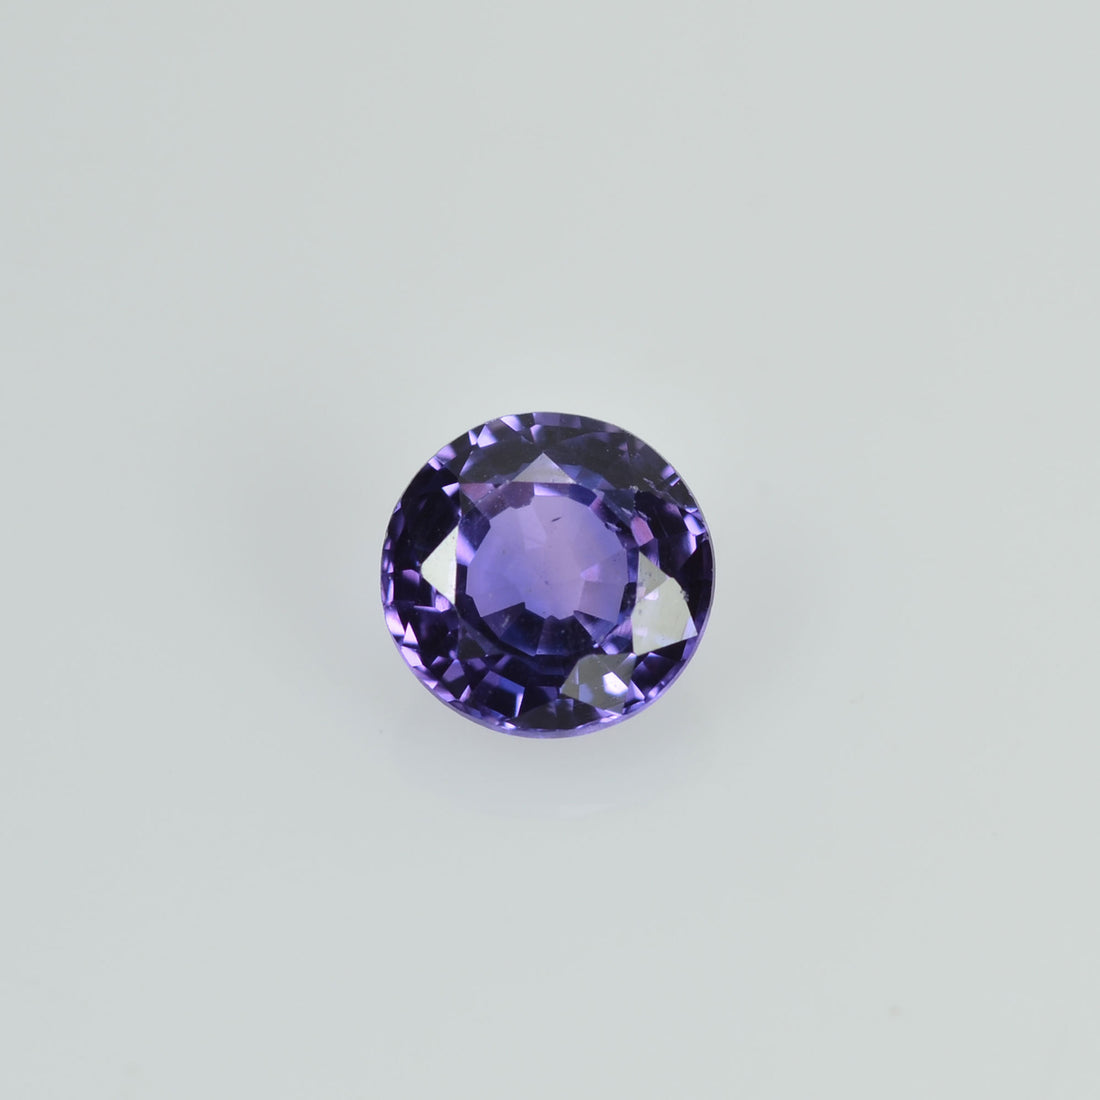 0.38 cts Natural Purple Sapphire Loose Gemstone Round Cut - Thai Gems Export Ltd.